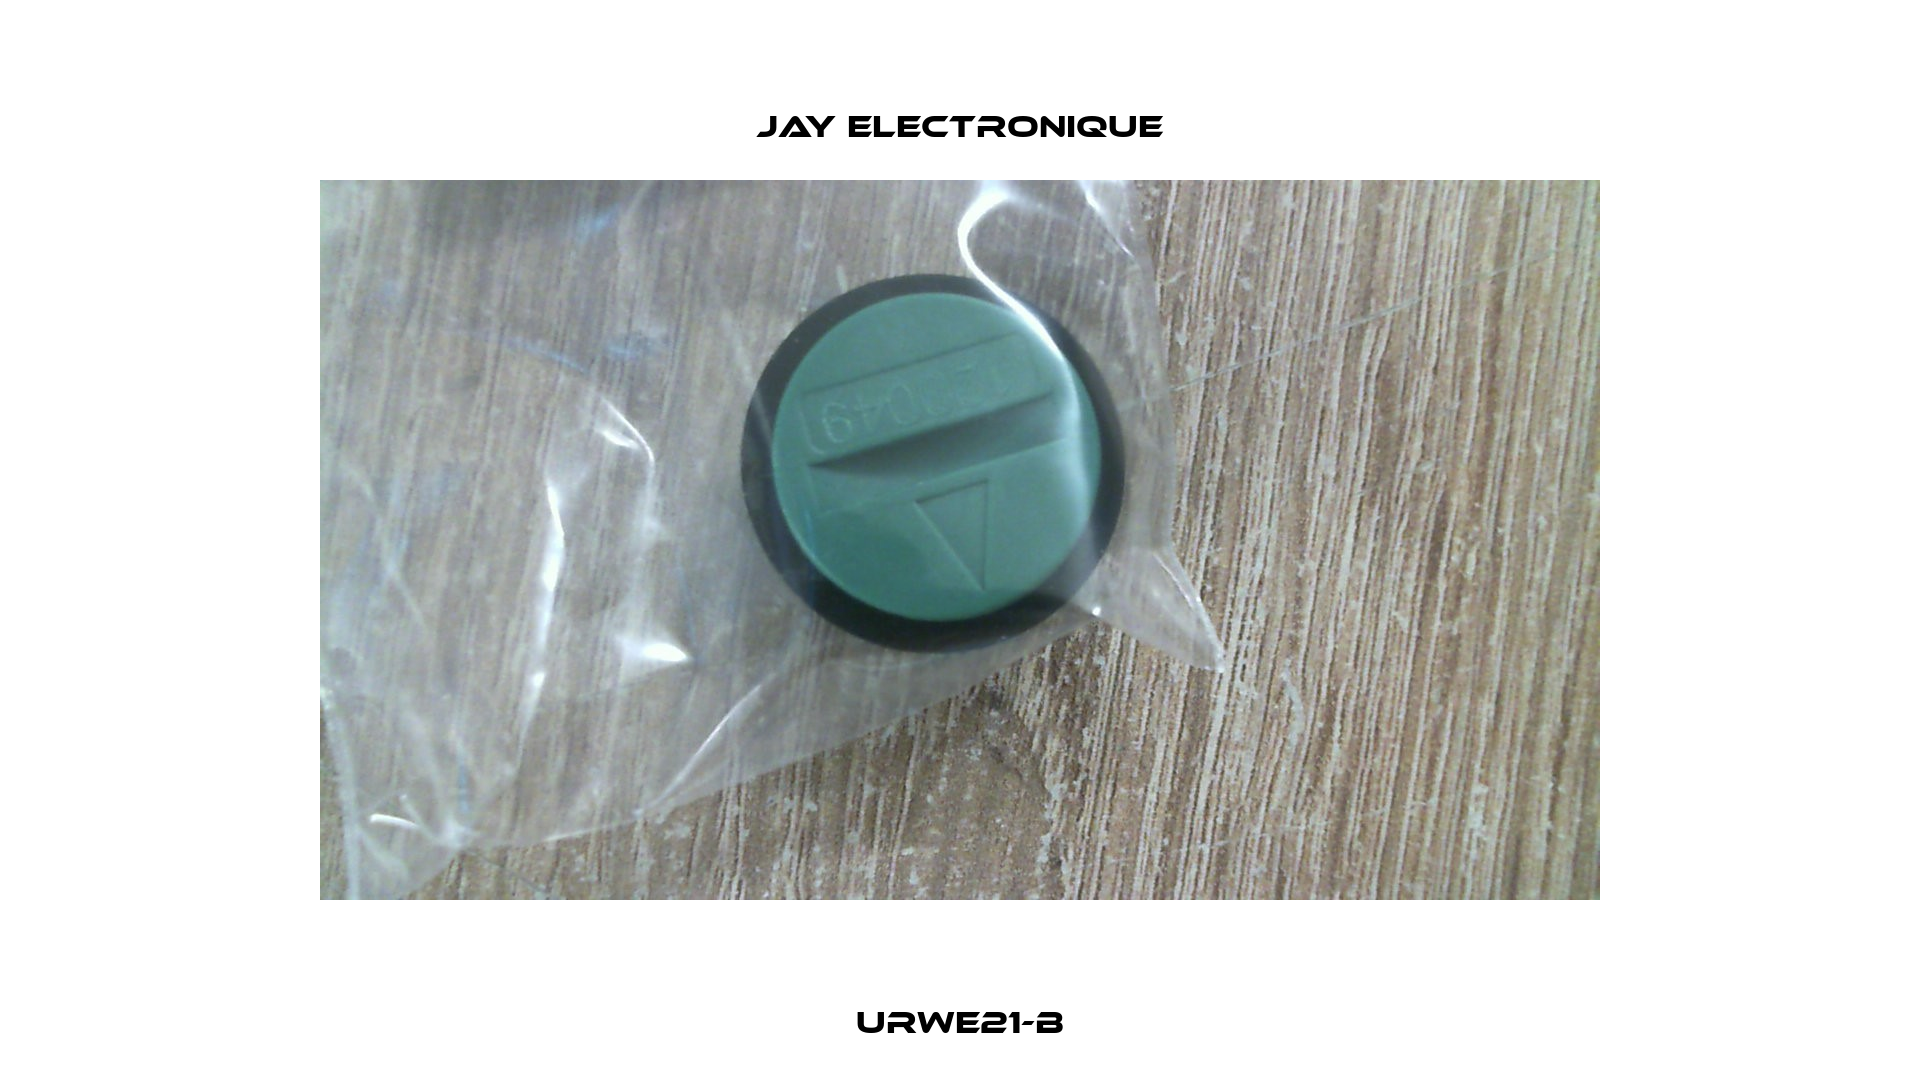 URWE21-B JAY Electronique